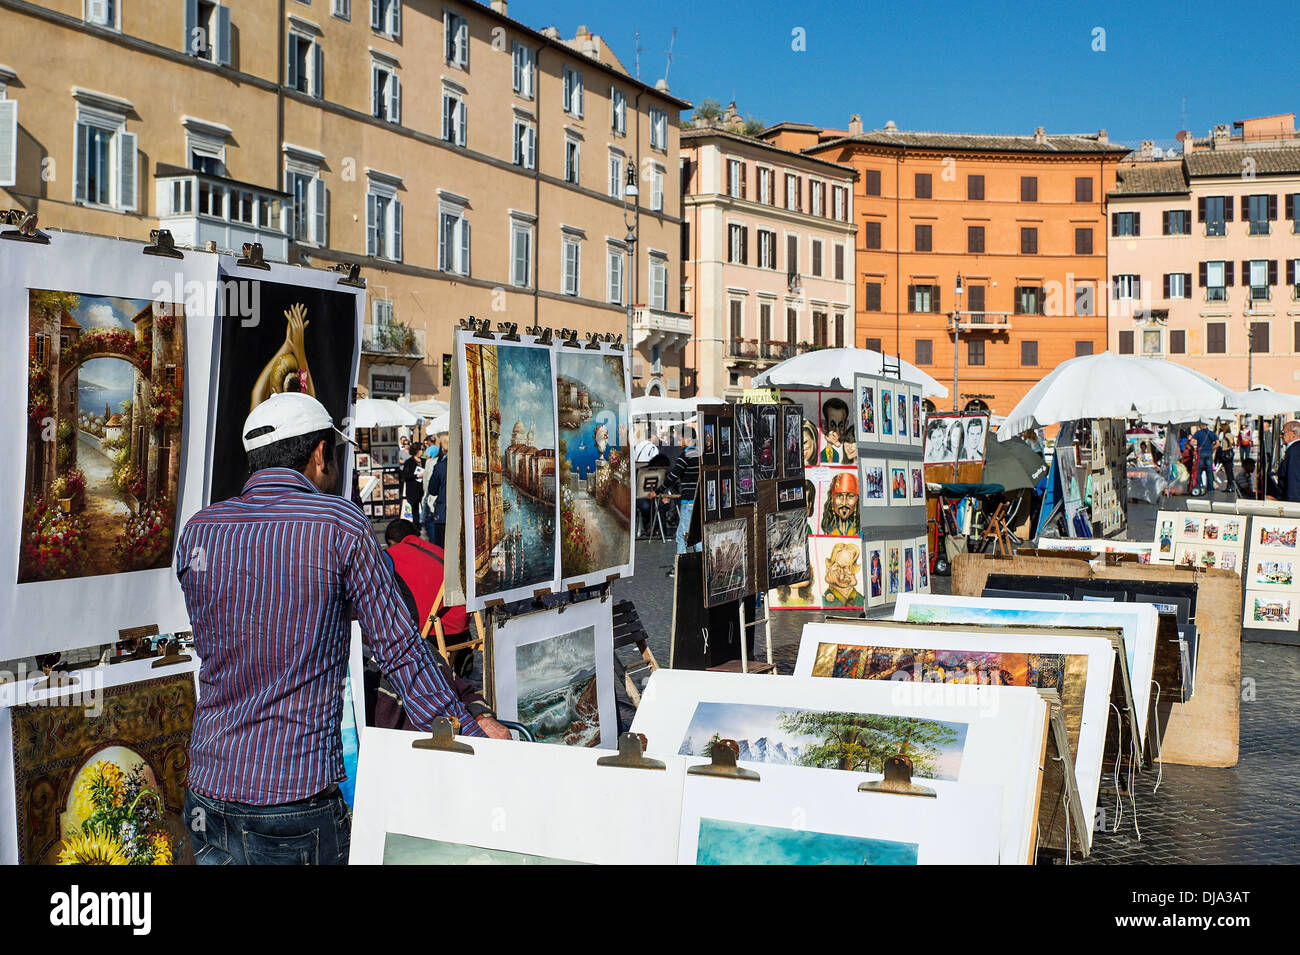 Les vendeurs d'art, la Piazza Navona, Rome, Italie Banque D'Images